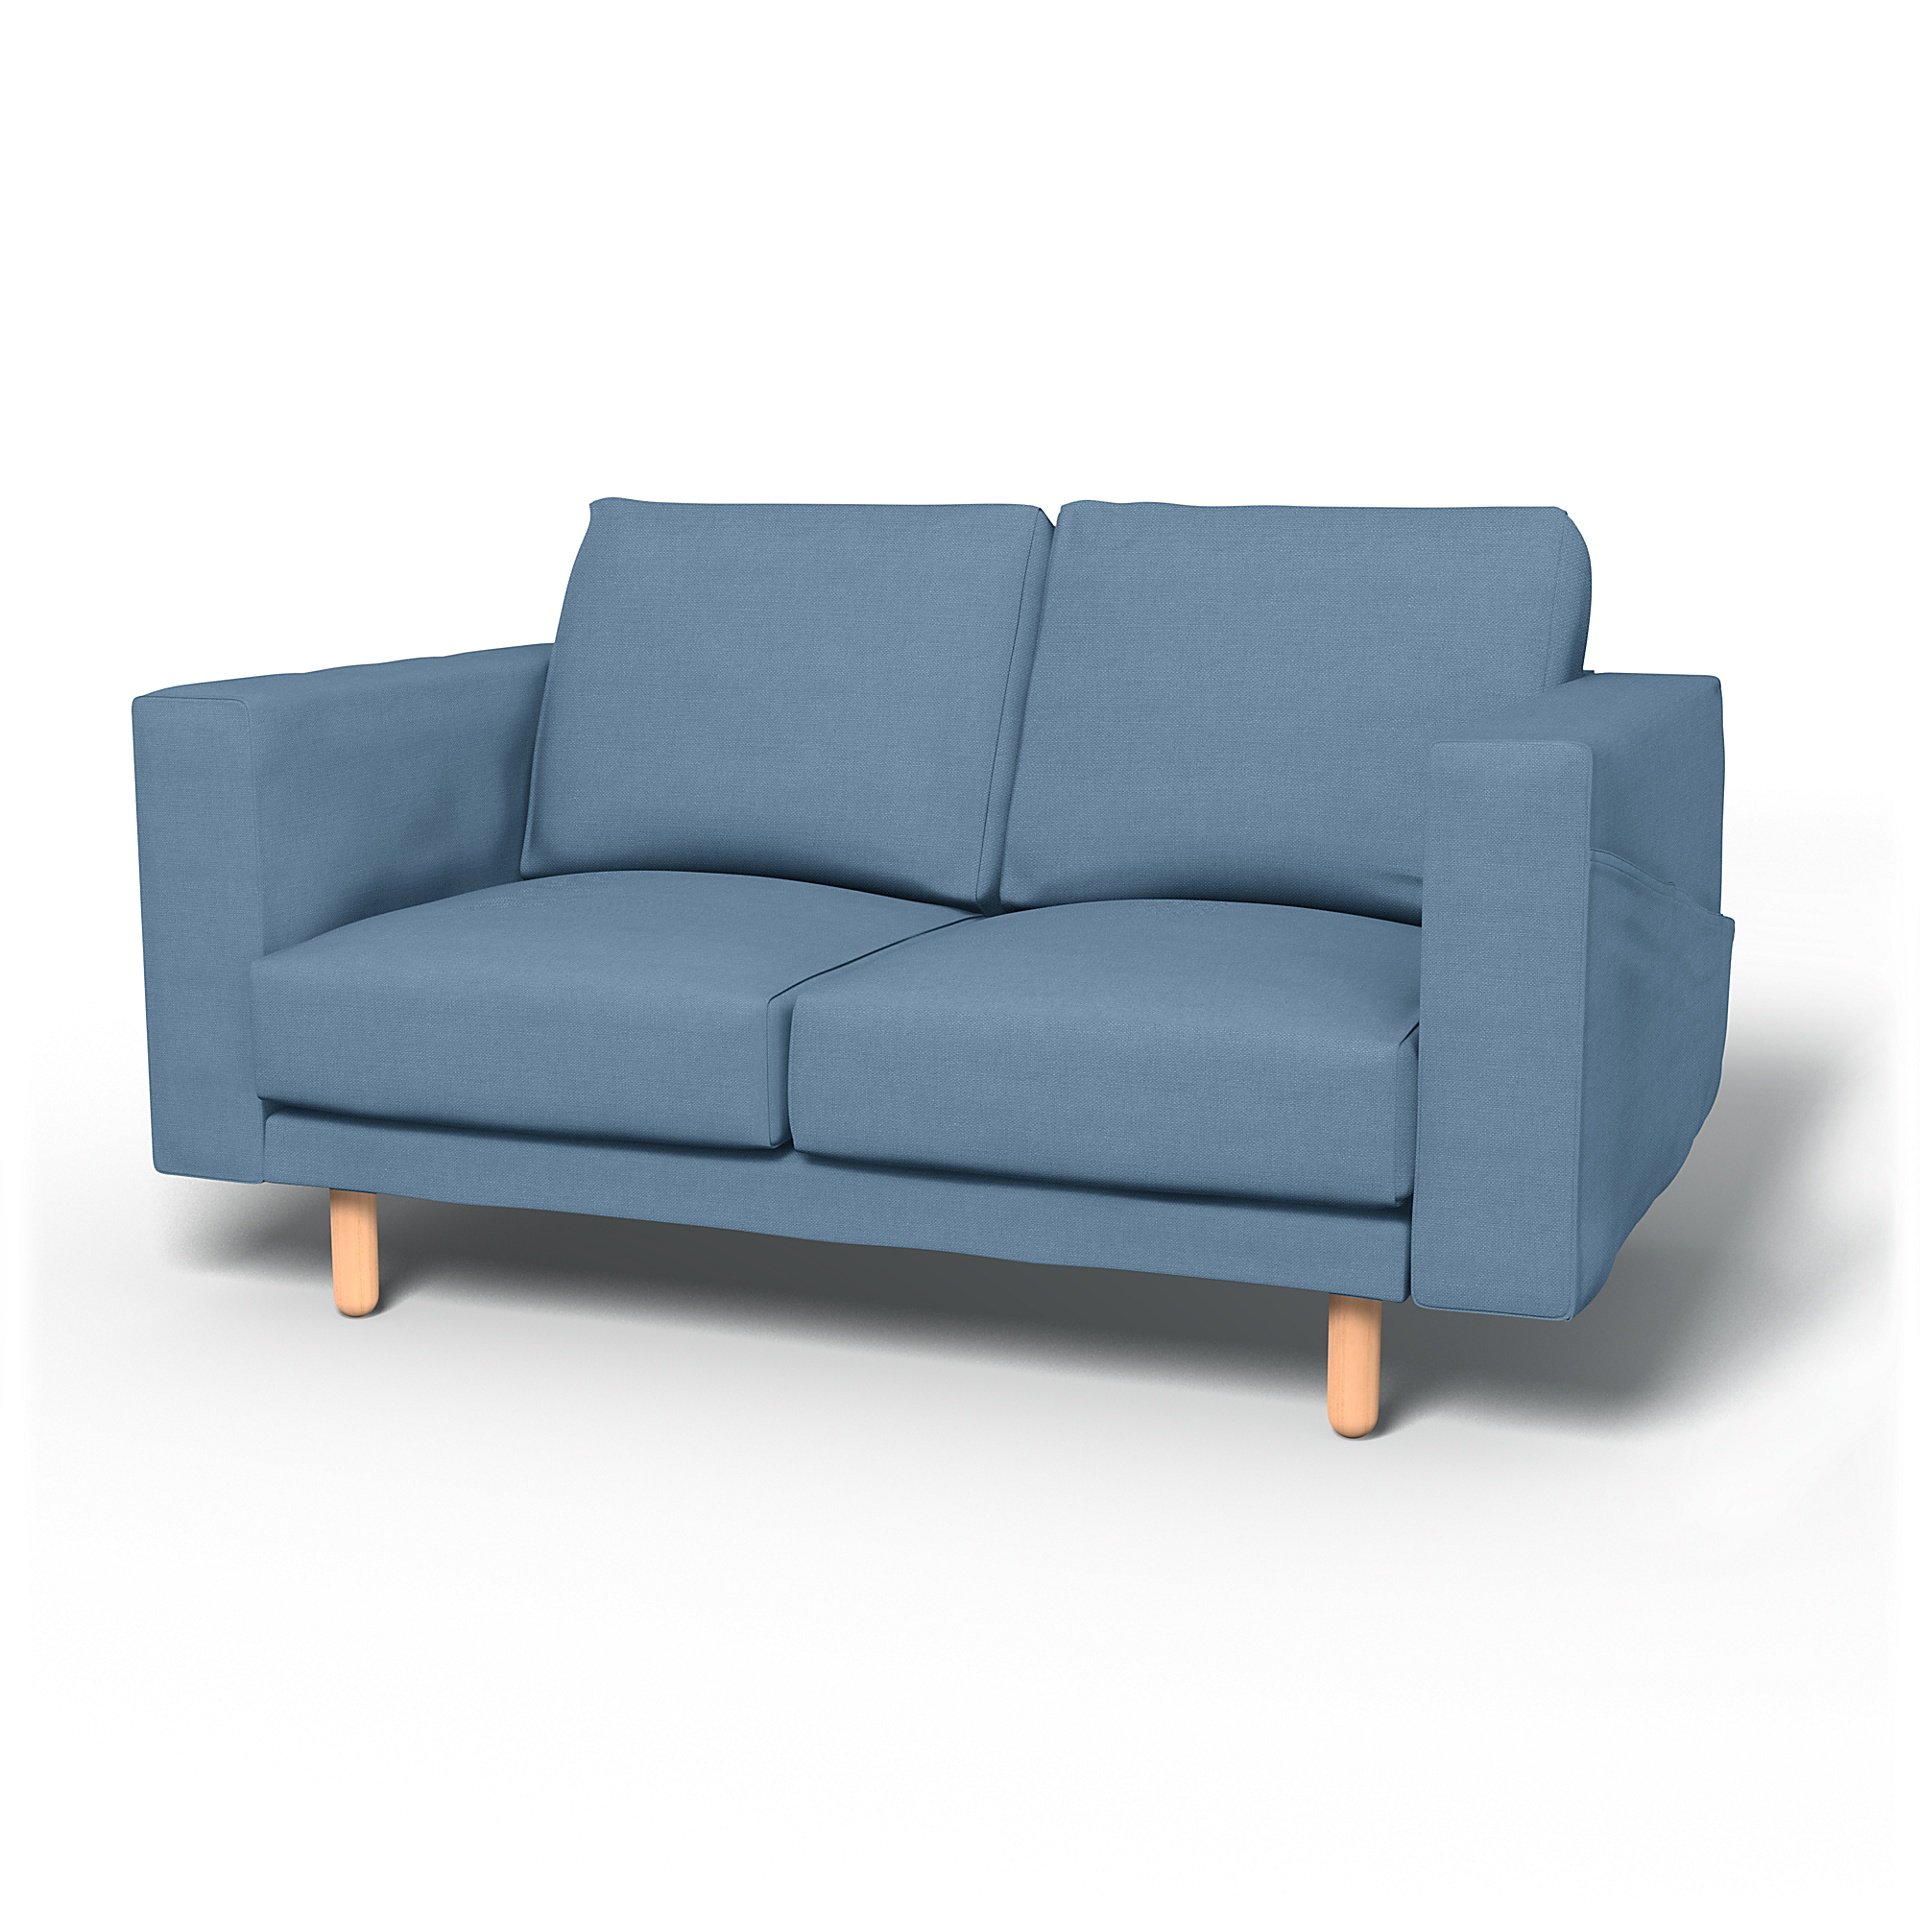 IKEA - Norsborg 2 Seater Sofa Cover, Vintage Blue, Linen - Bemz